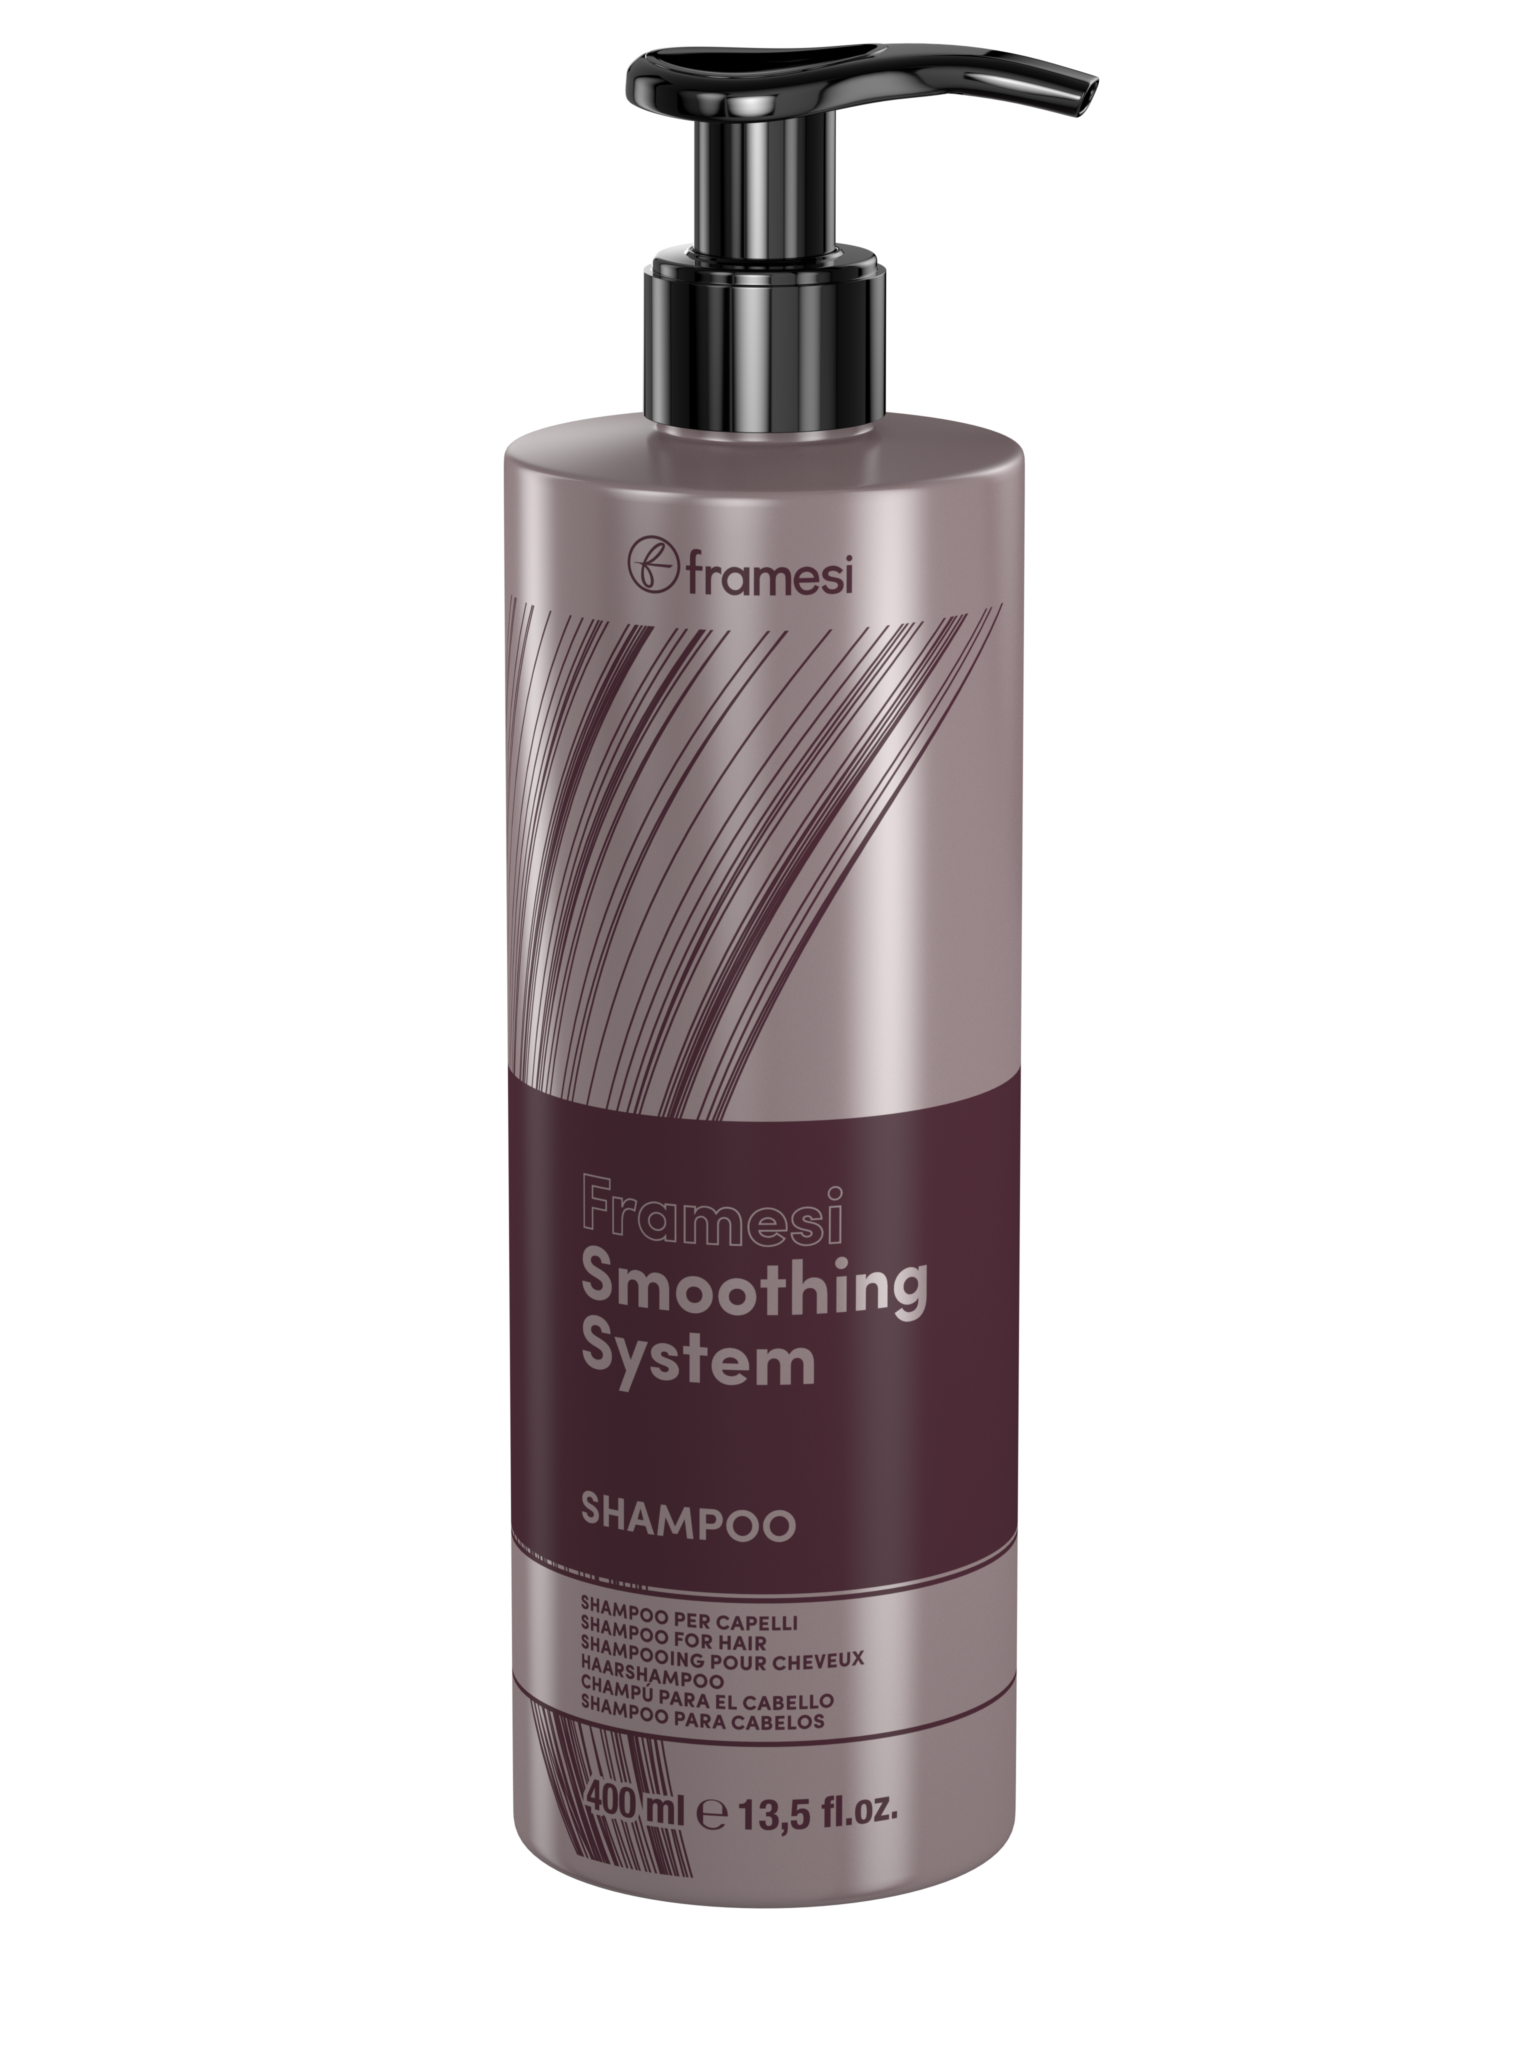 Framesi Smoothing System Shampoo Step 1